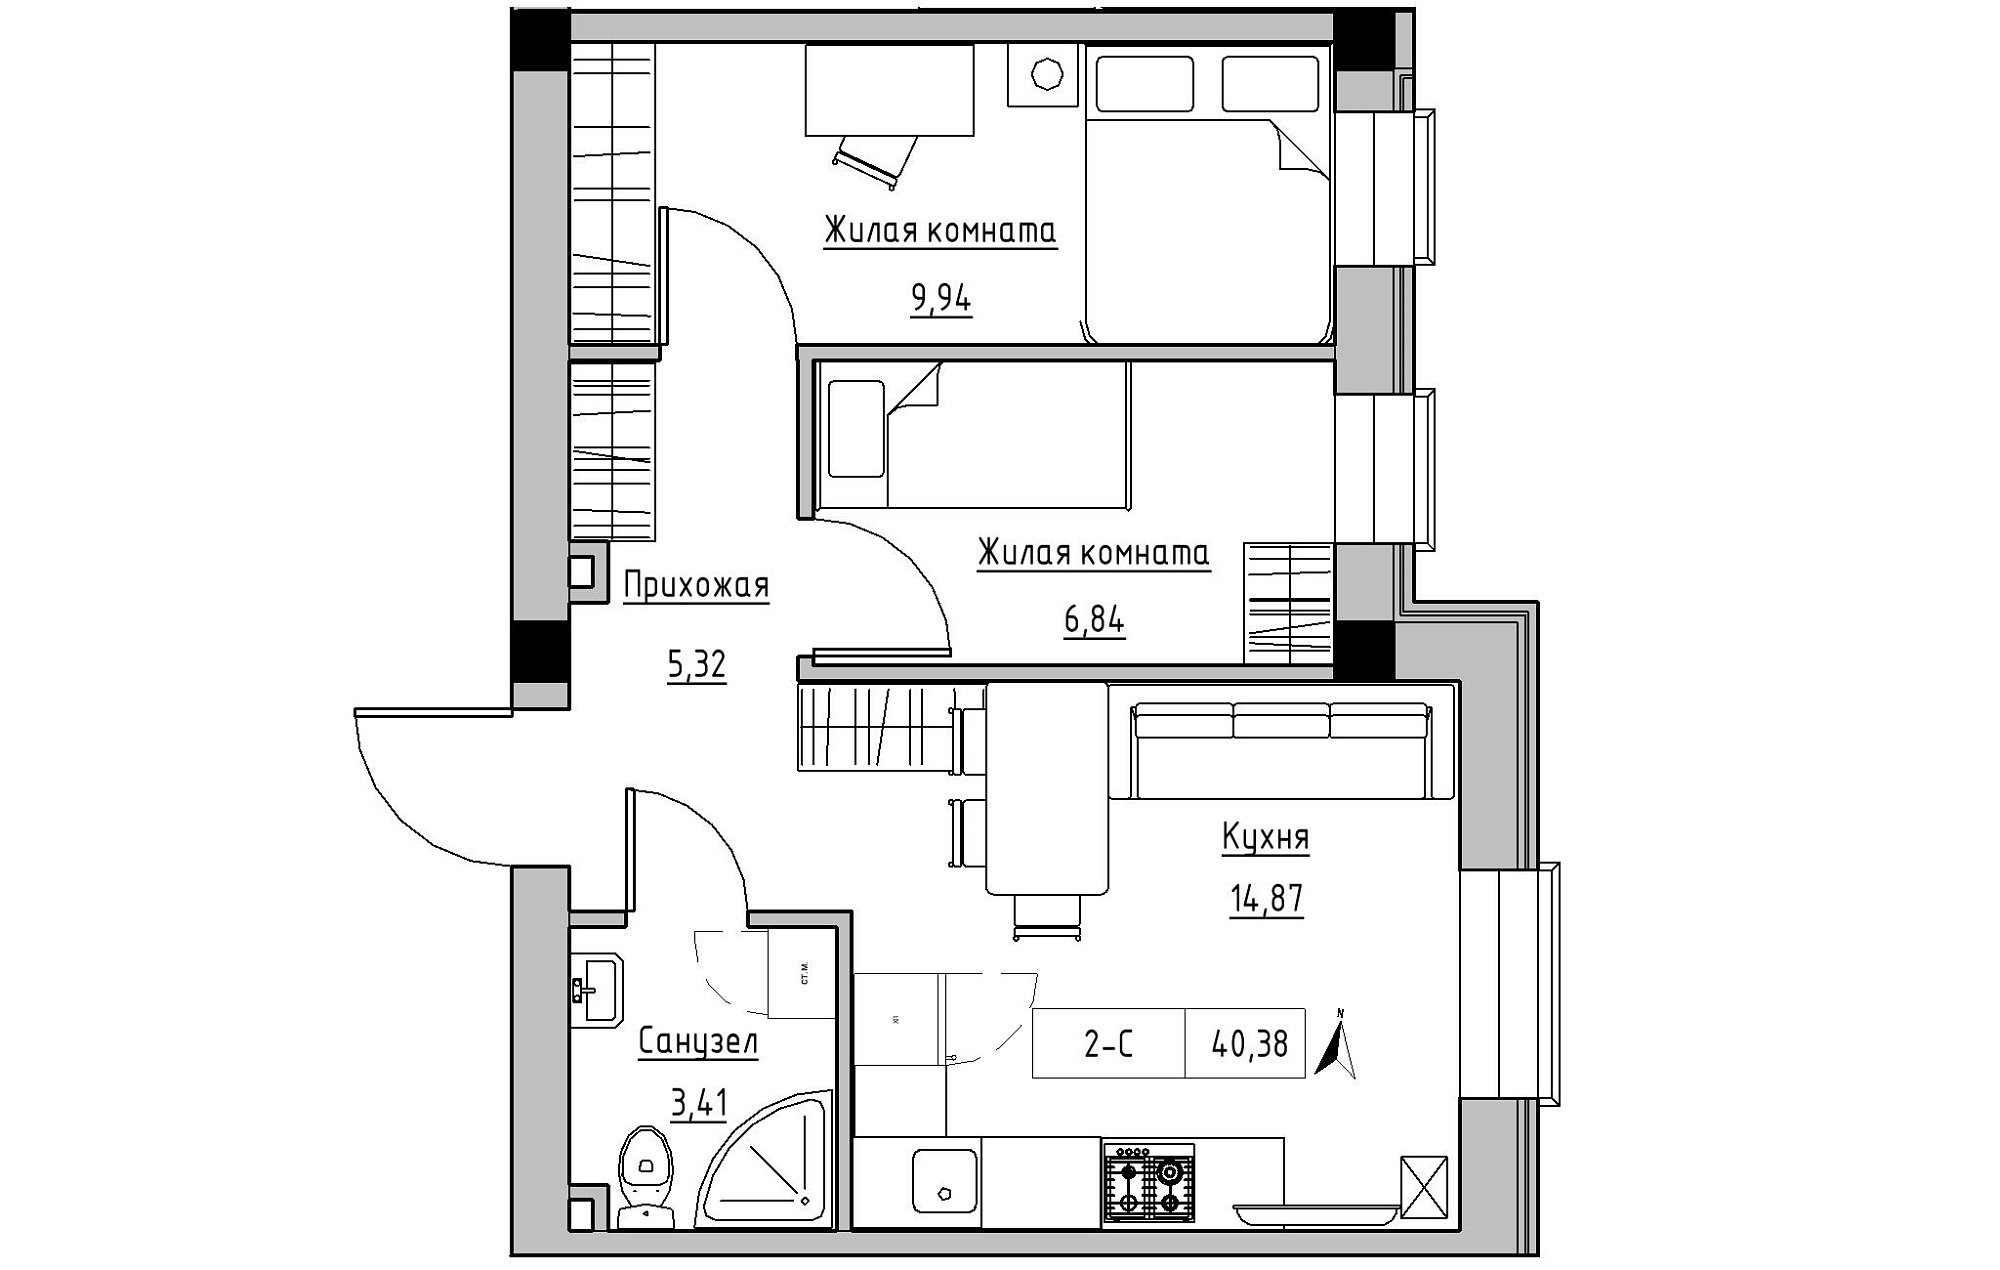 Planning 2-rm flats area 40.38m2, KS-019-01/0006.